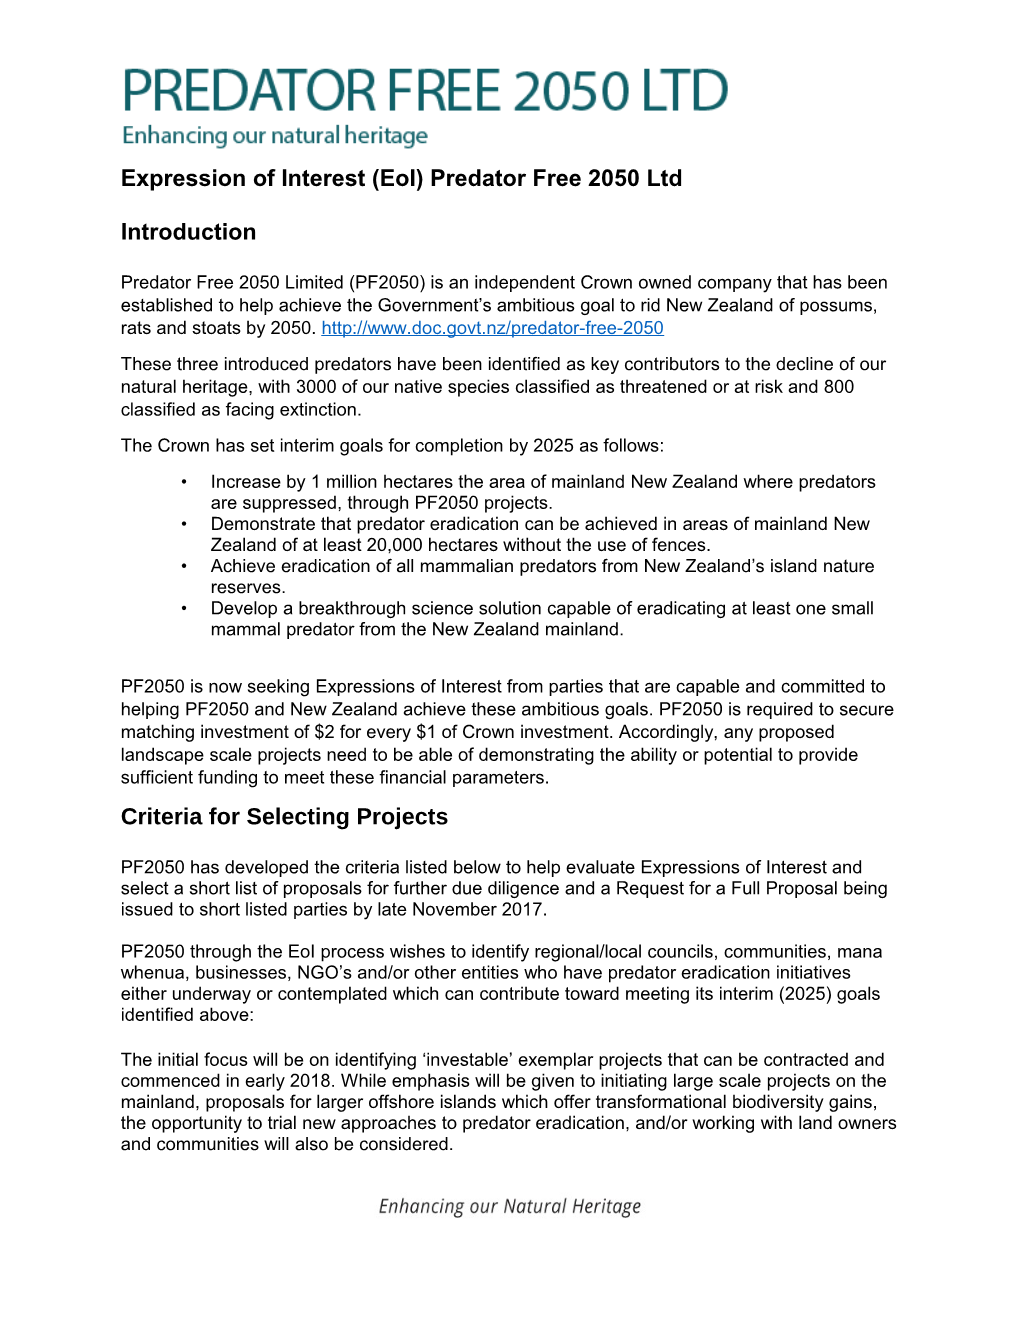 Expression of Interest (Eoi)Predator Free 2050 Ltd